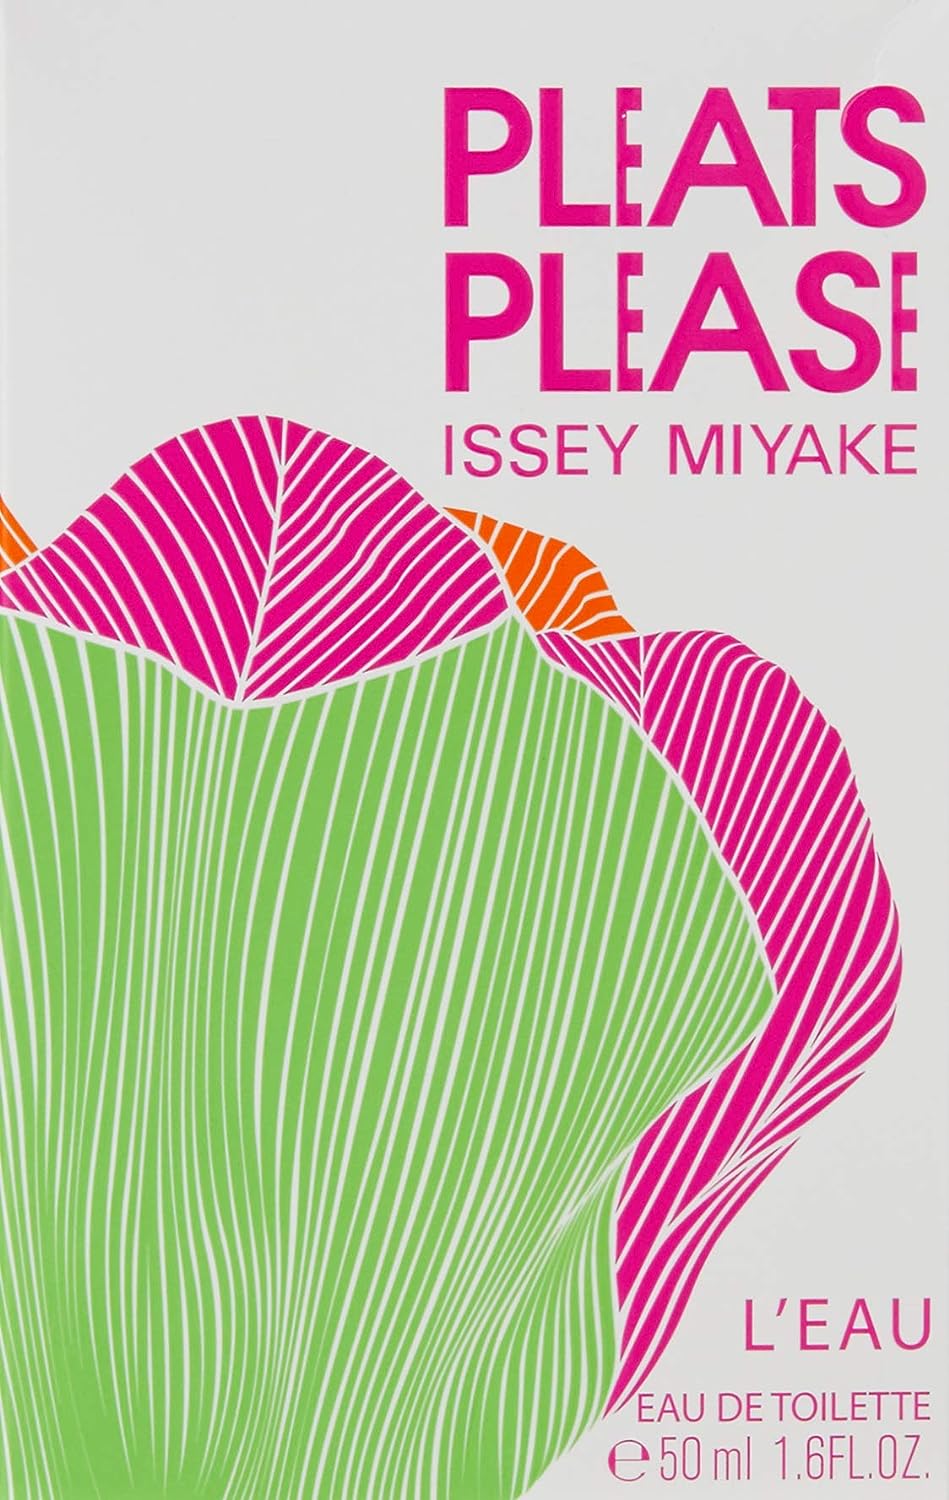 Issey Miyake Pleats Please L'eau EDT Spray - 1.6 fl oz bottle